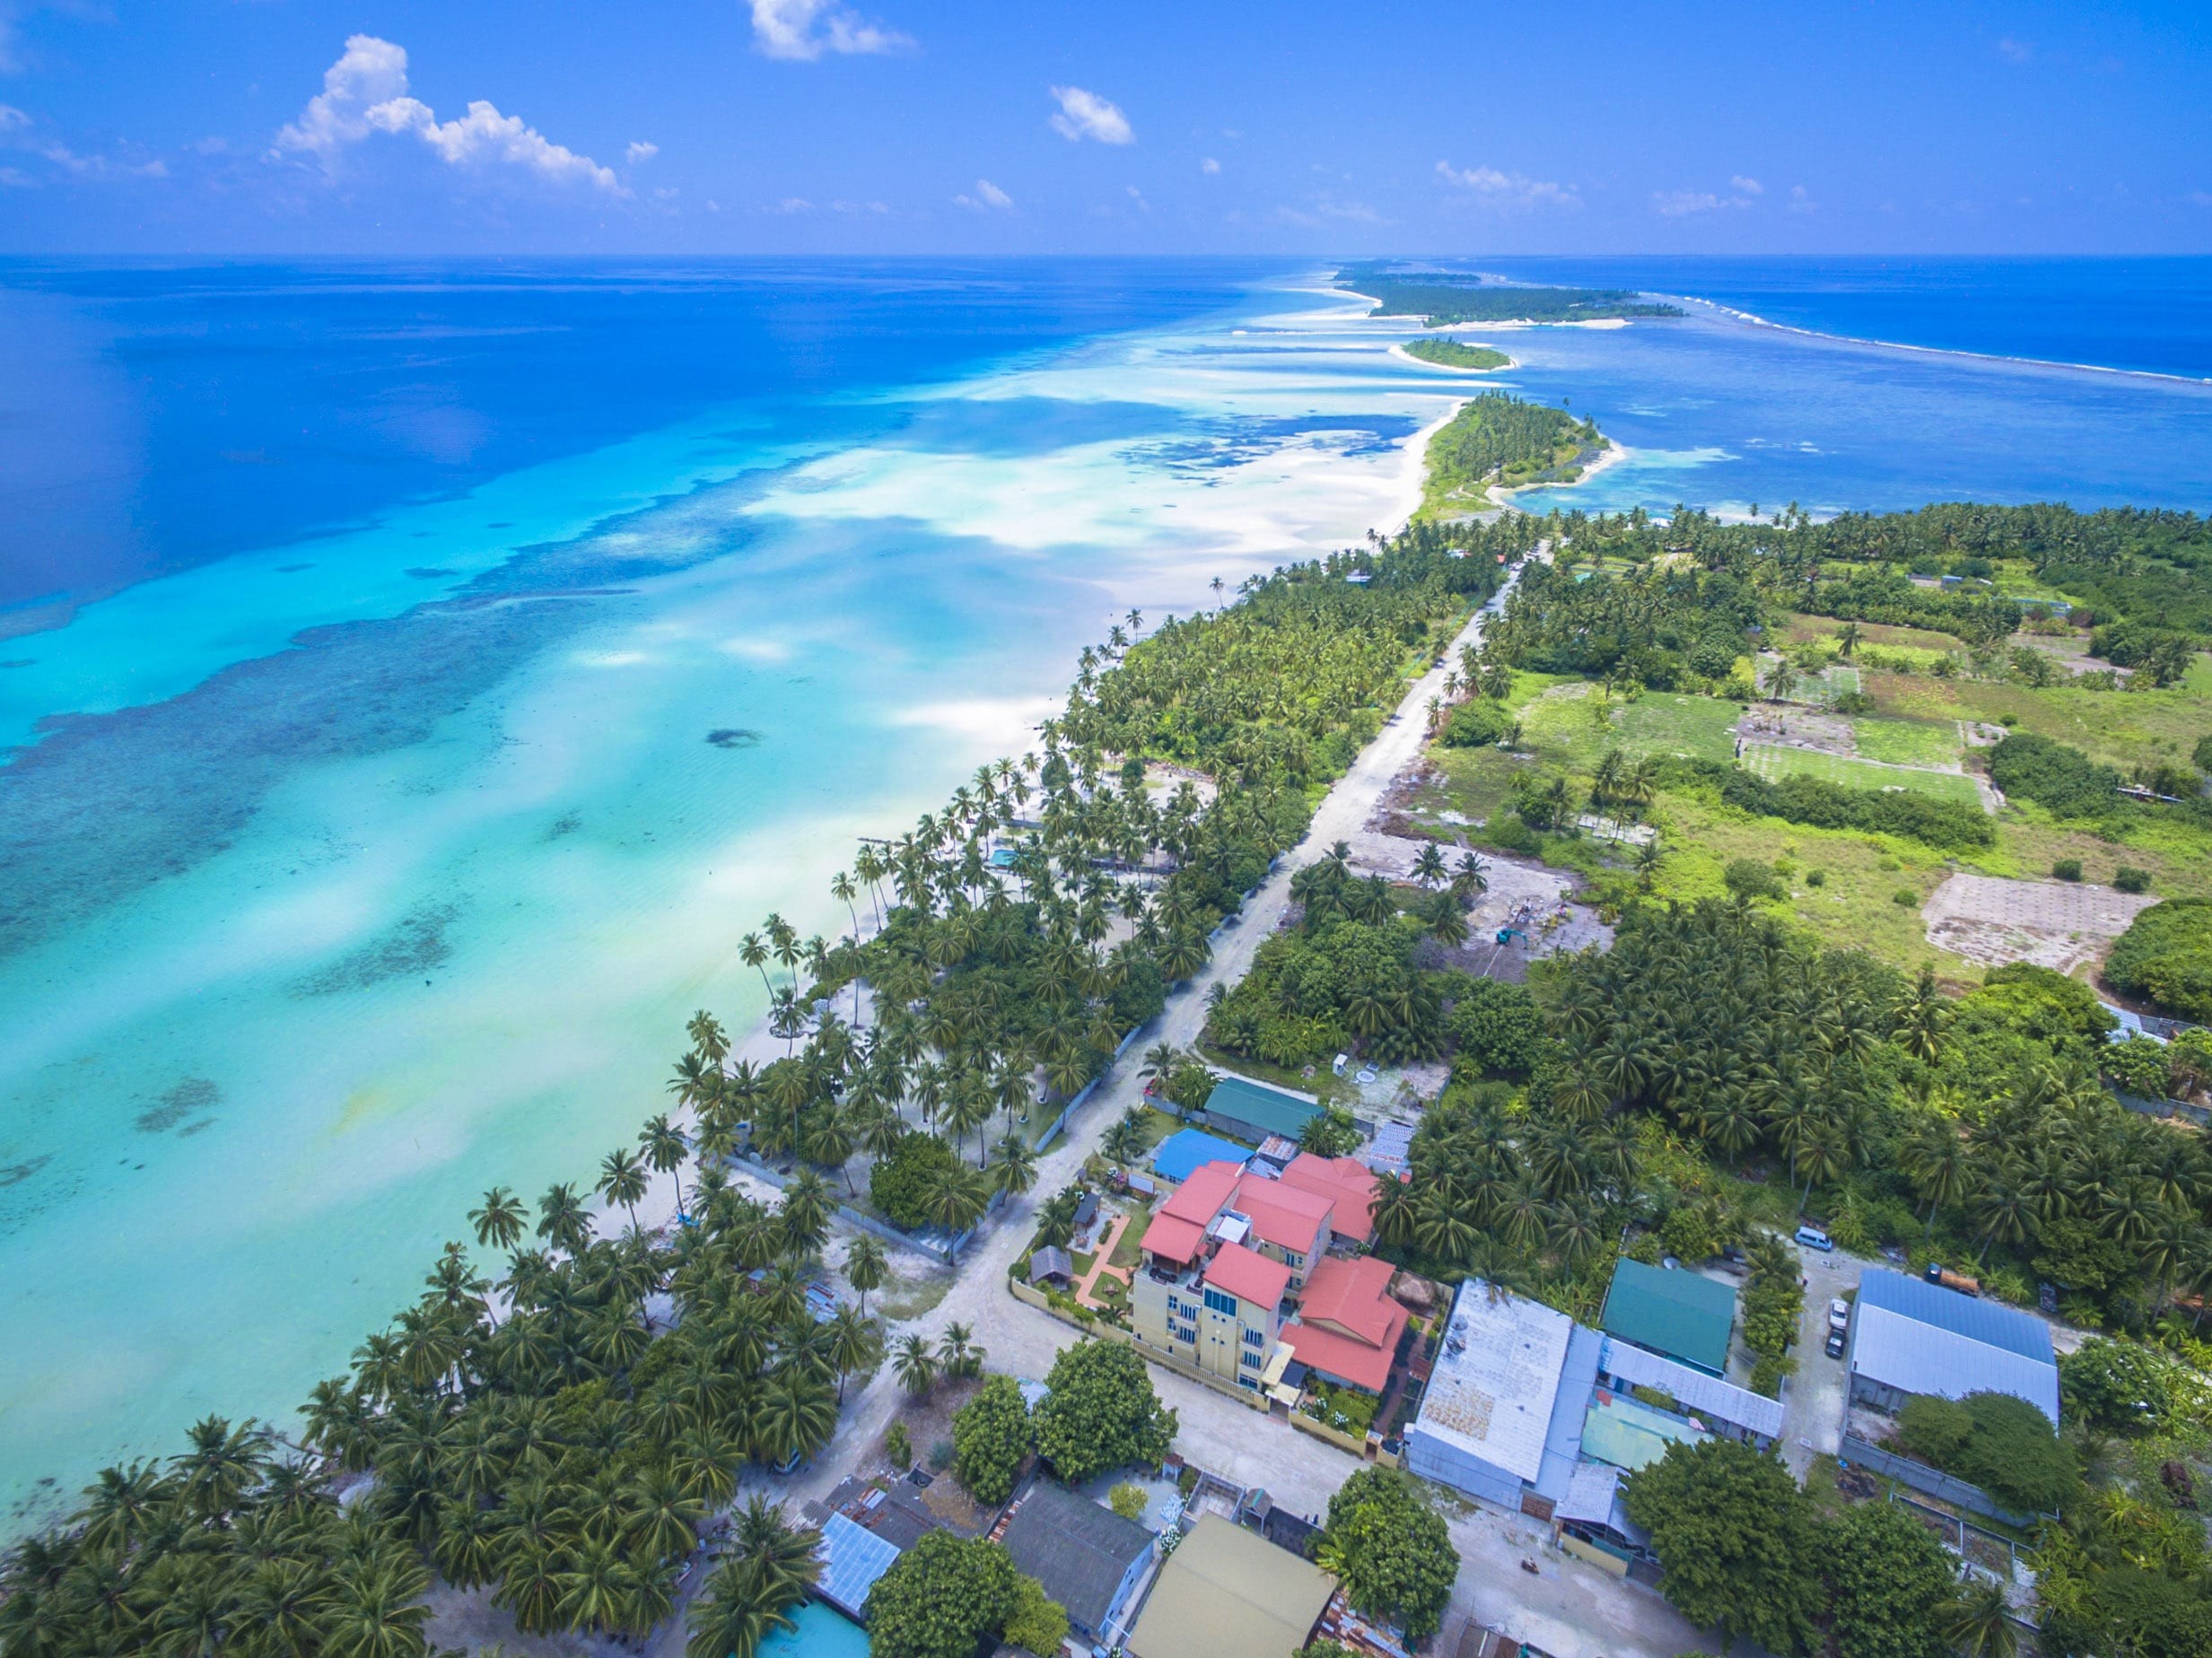 Emperor Maldives Opens First Dive Center On Gan, Laamu Atoll